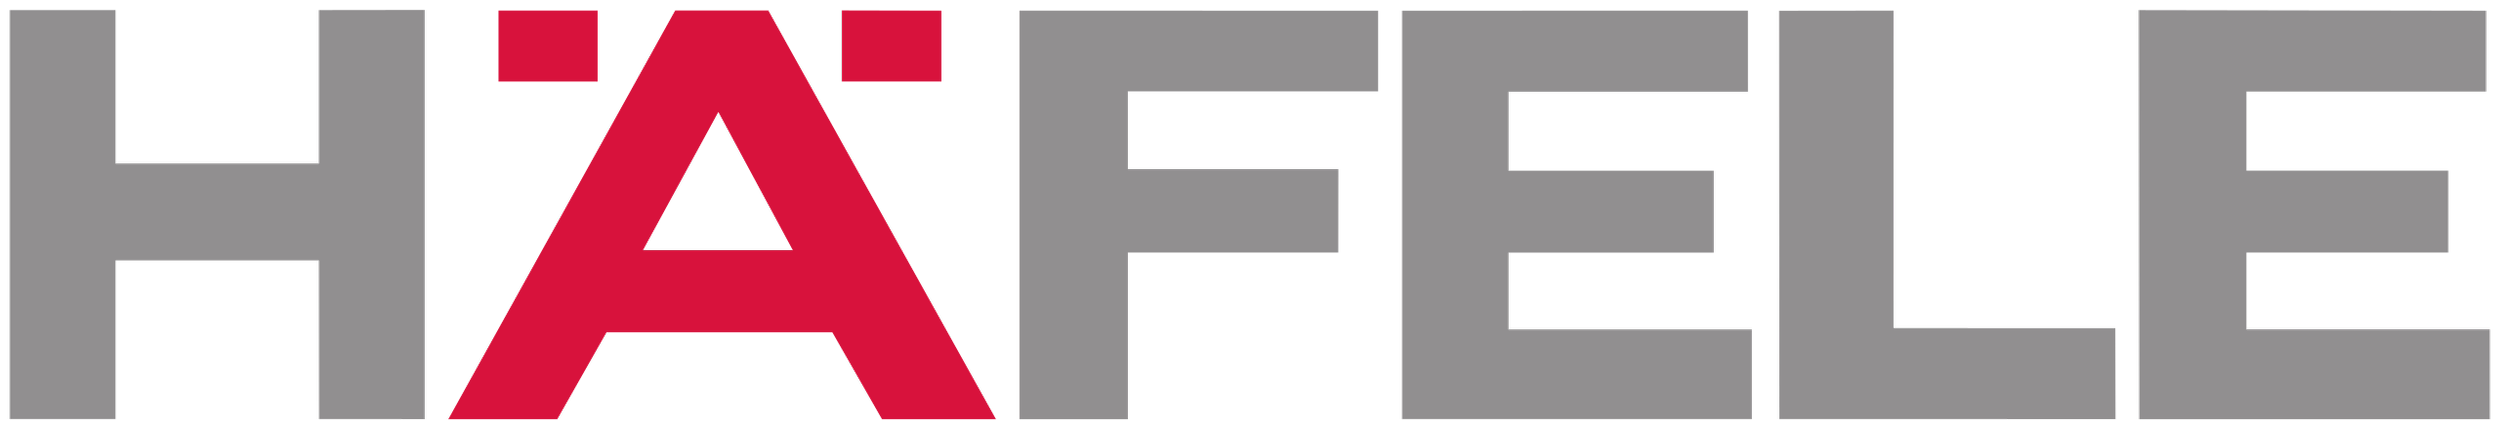 Häfele Logo.png